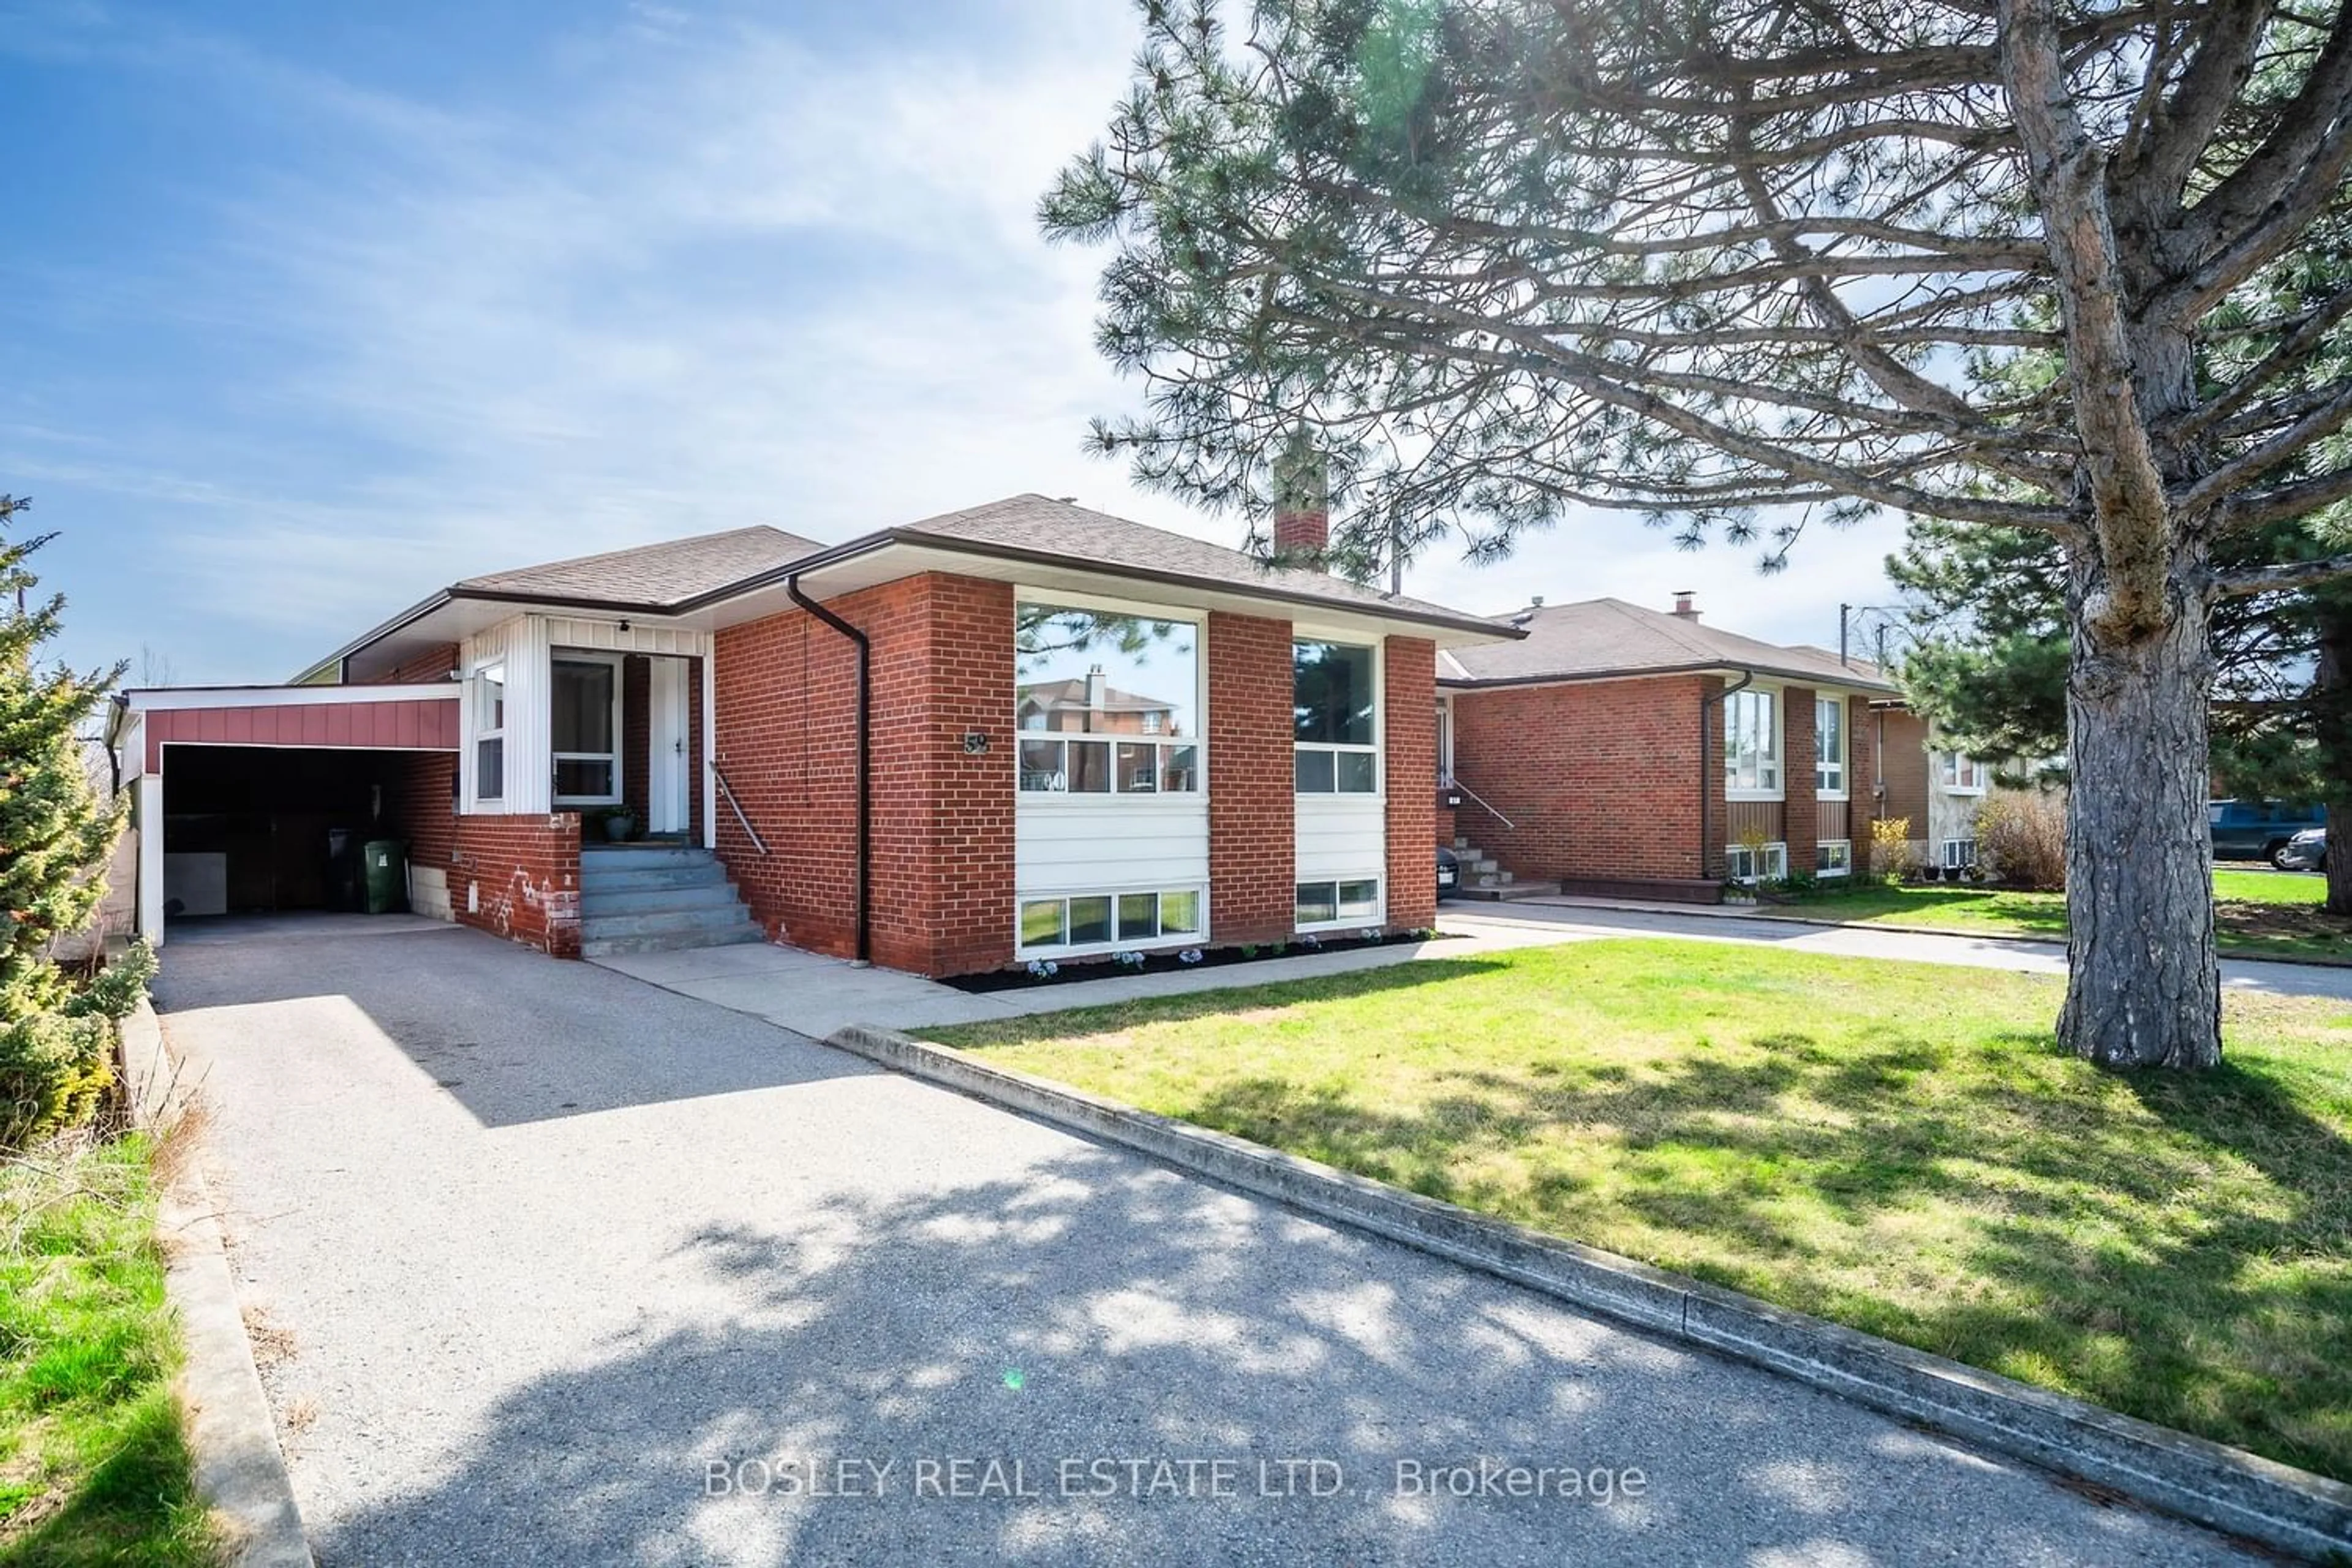 Home with brick exterior material for 59 Crosland Dr, Toronto Ontario M1R 4M9